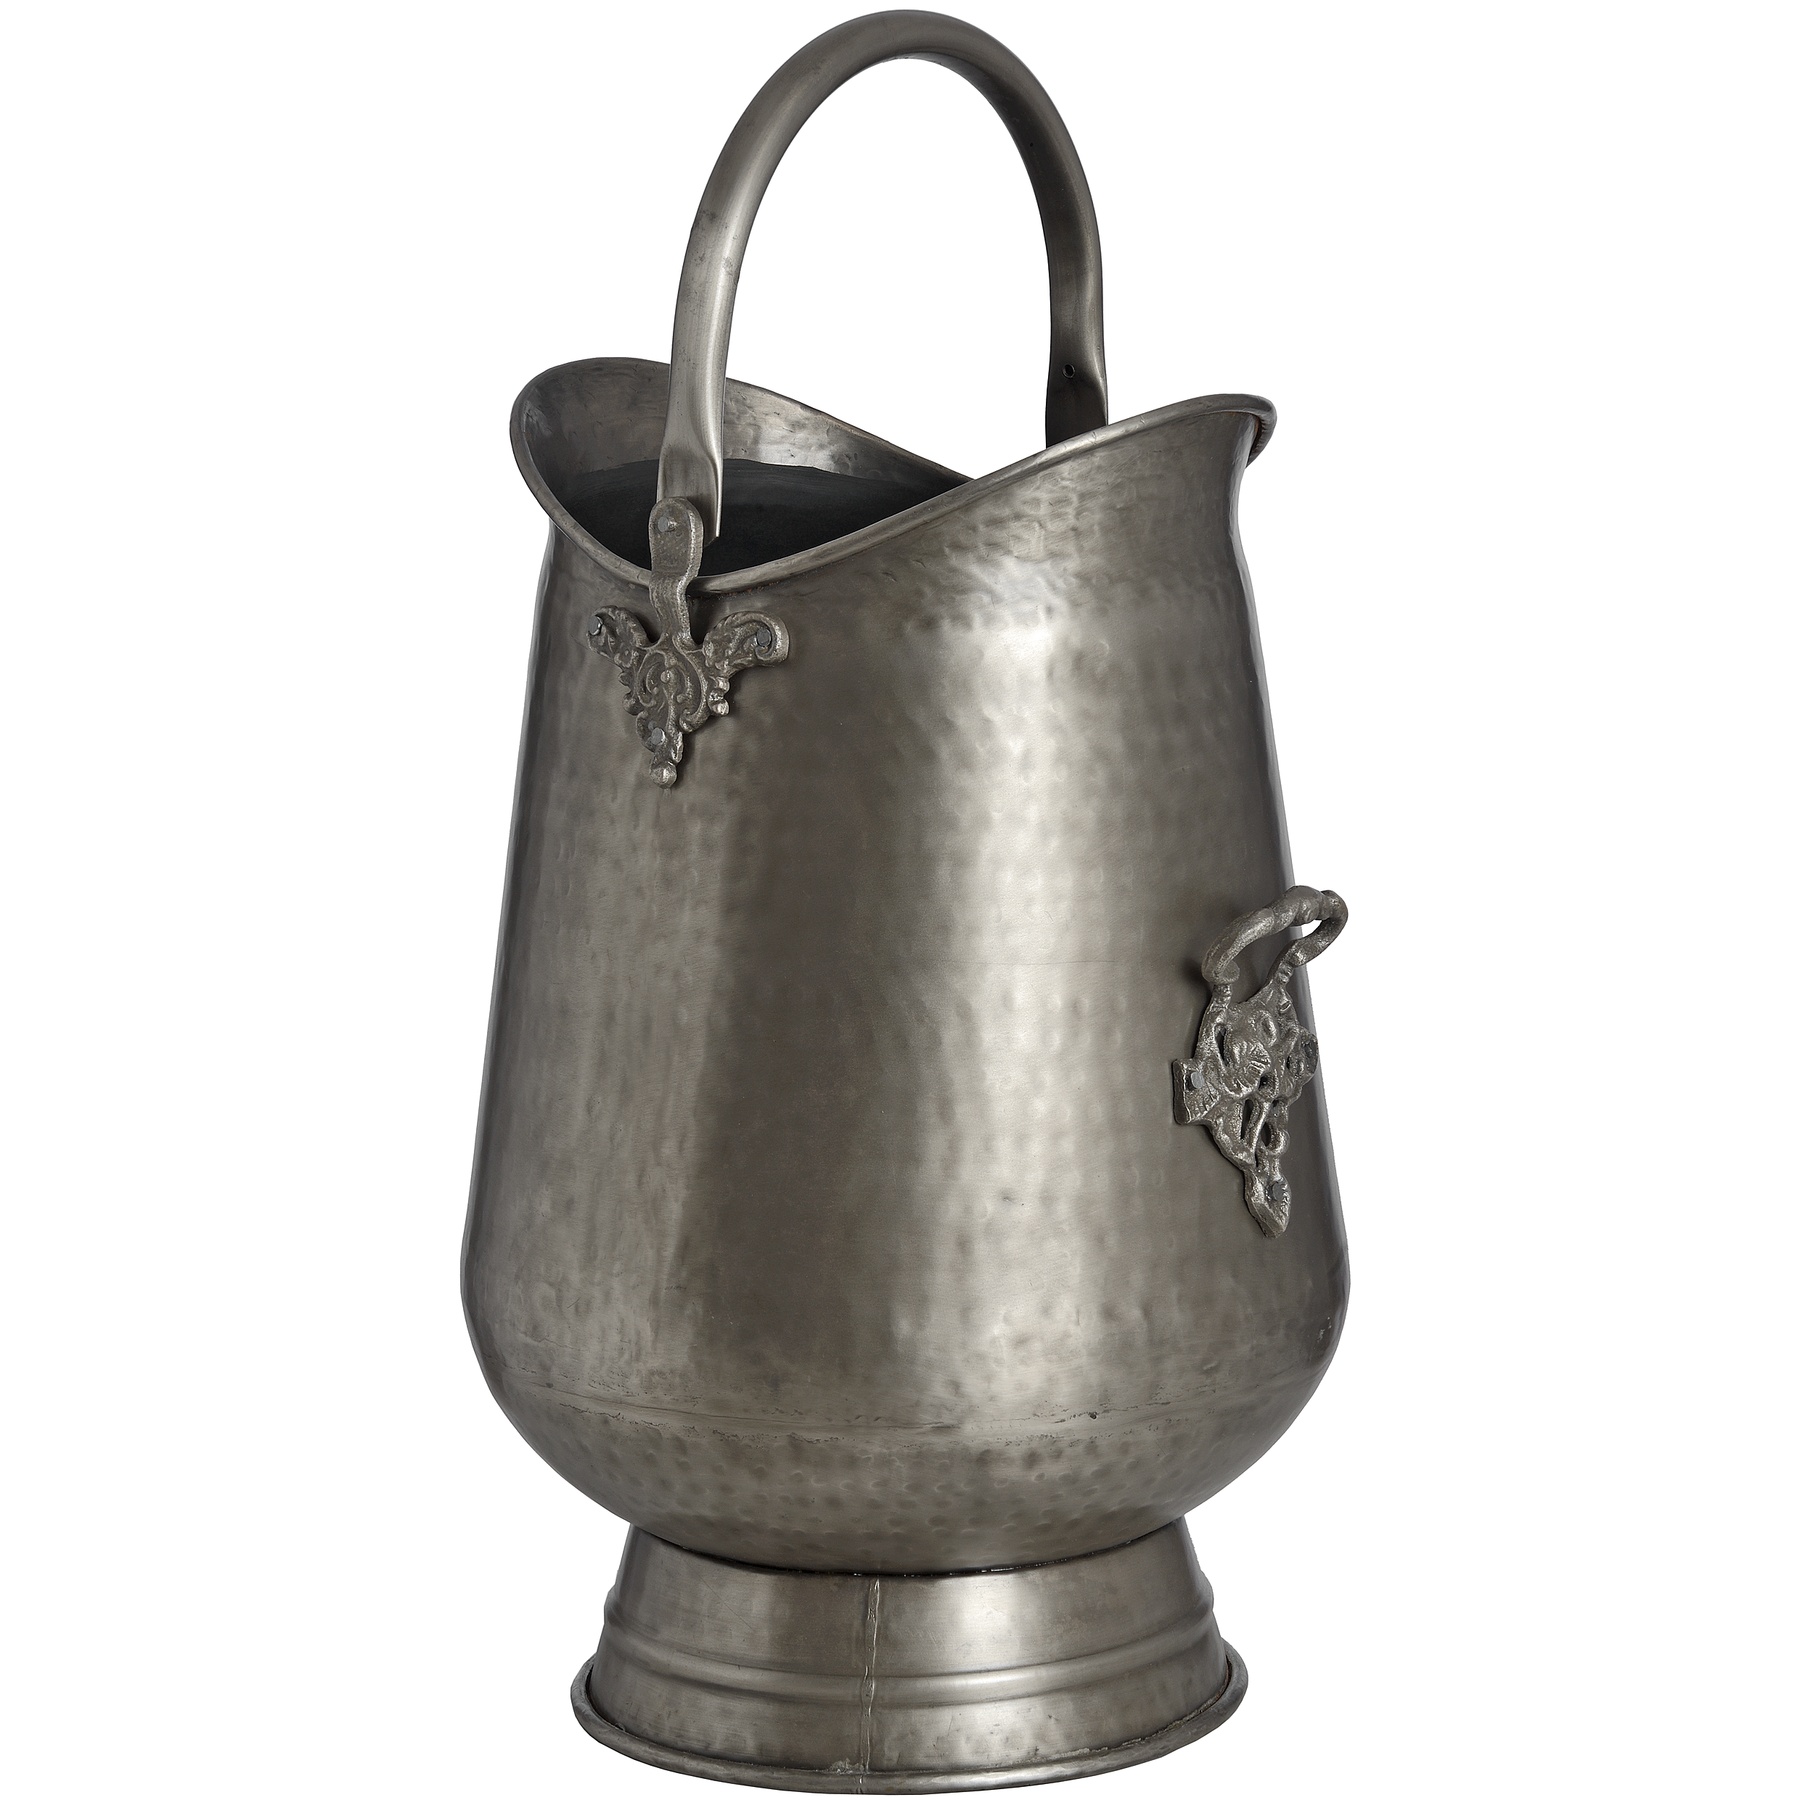 Antique Pewter Coal Bucket - Image 1